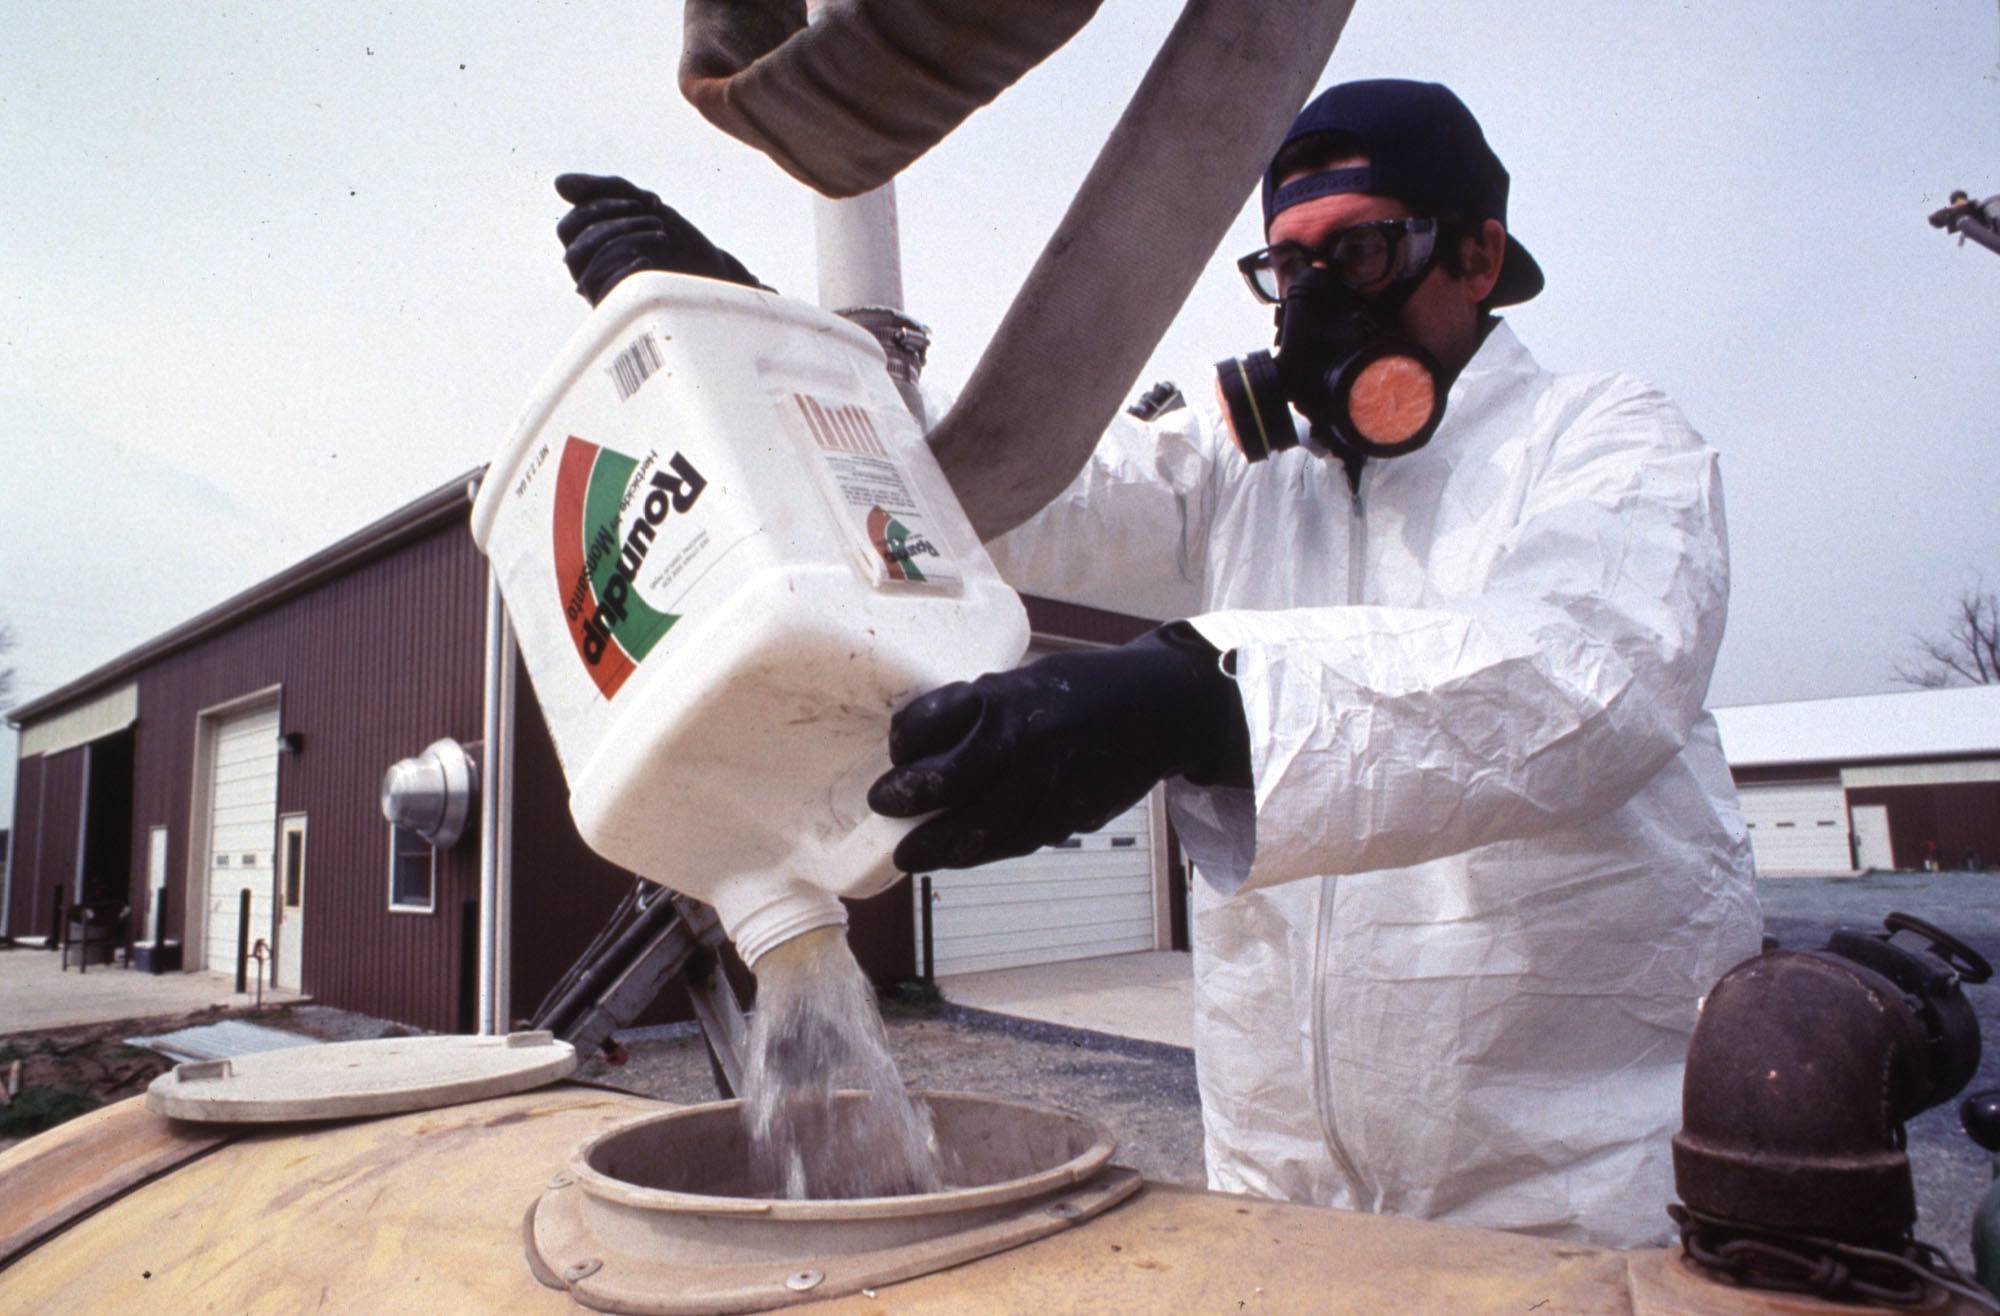 A farm worker handles a common pesticide